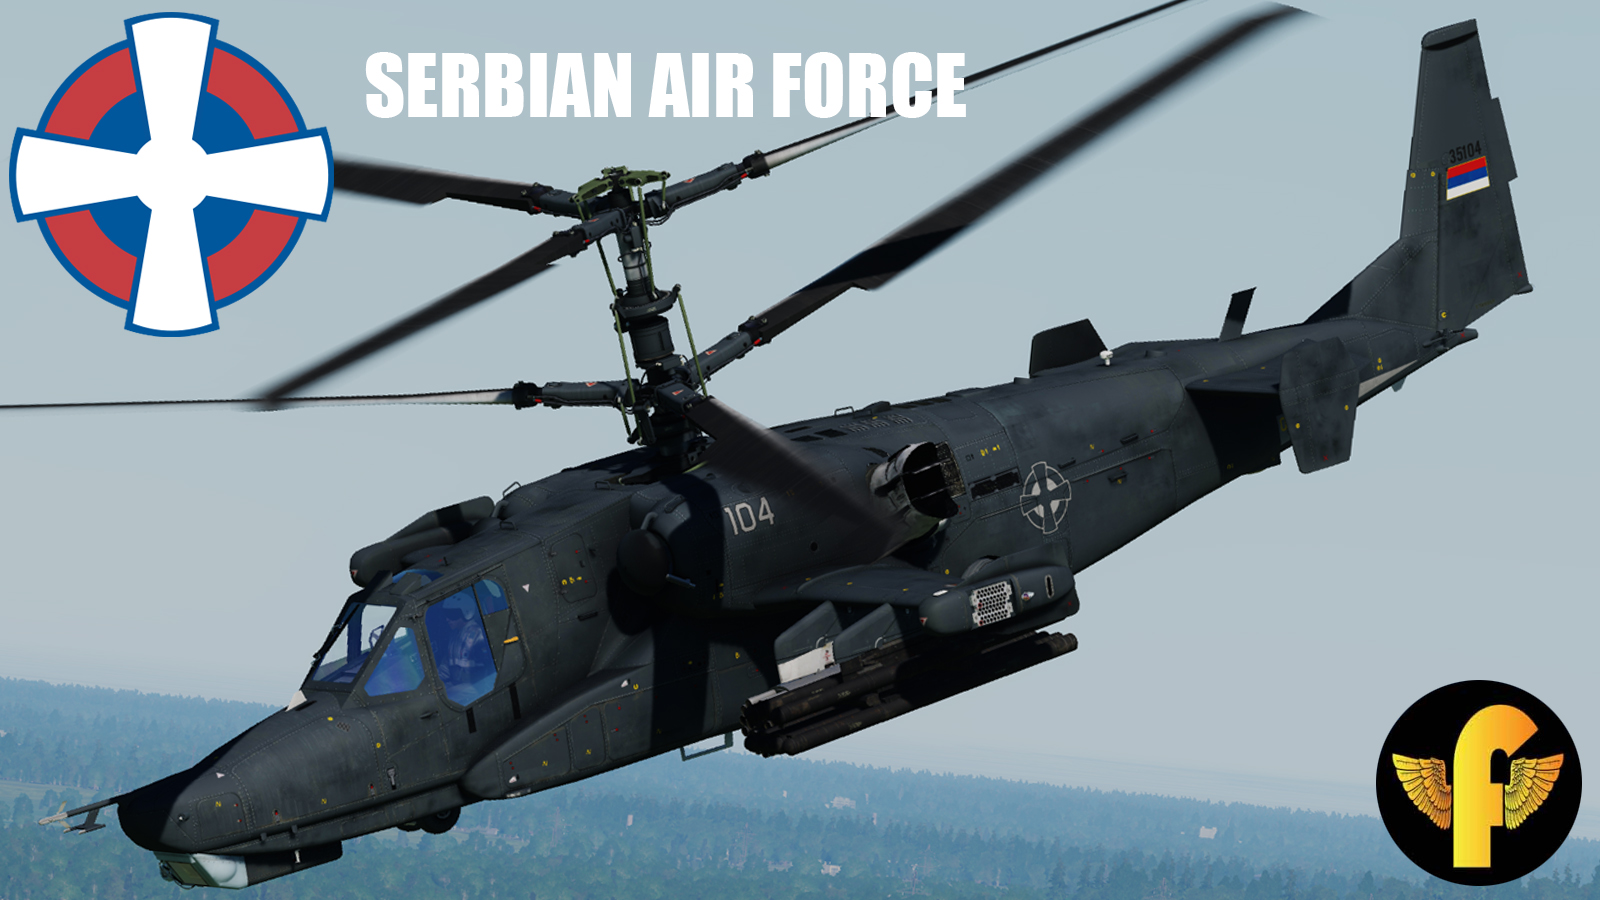 Serbian Air Force 714. phe "Senke" Fictive